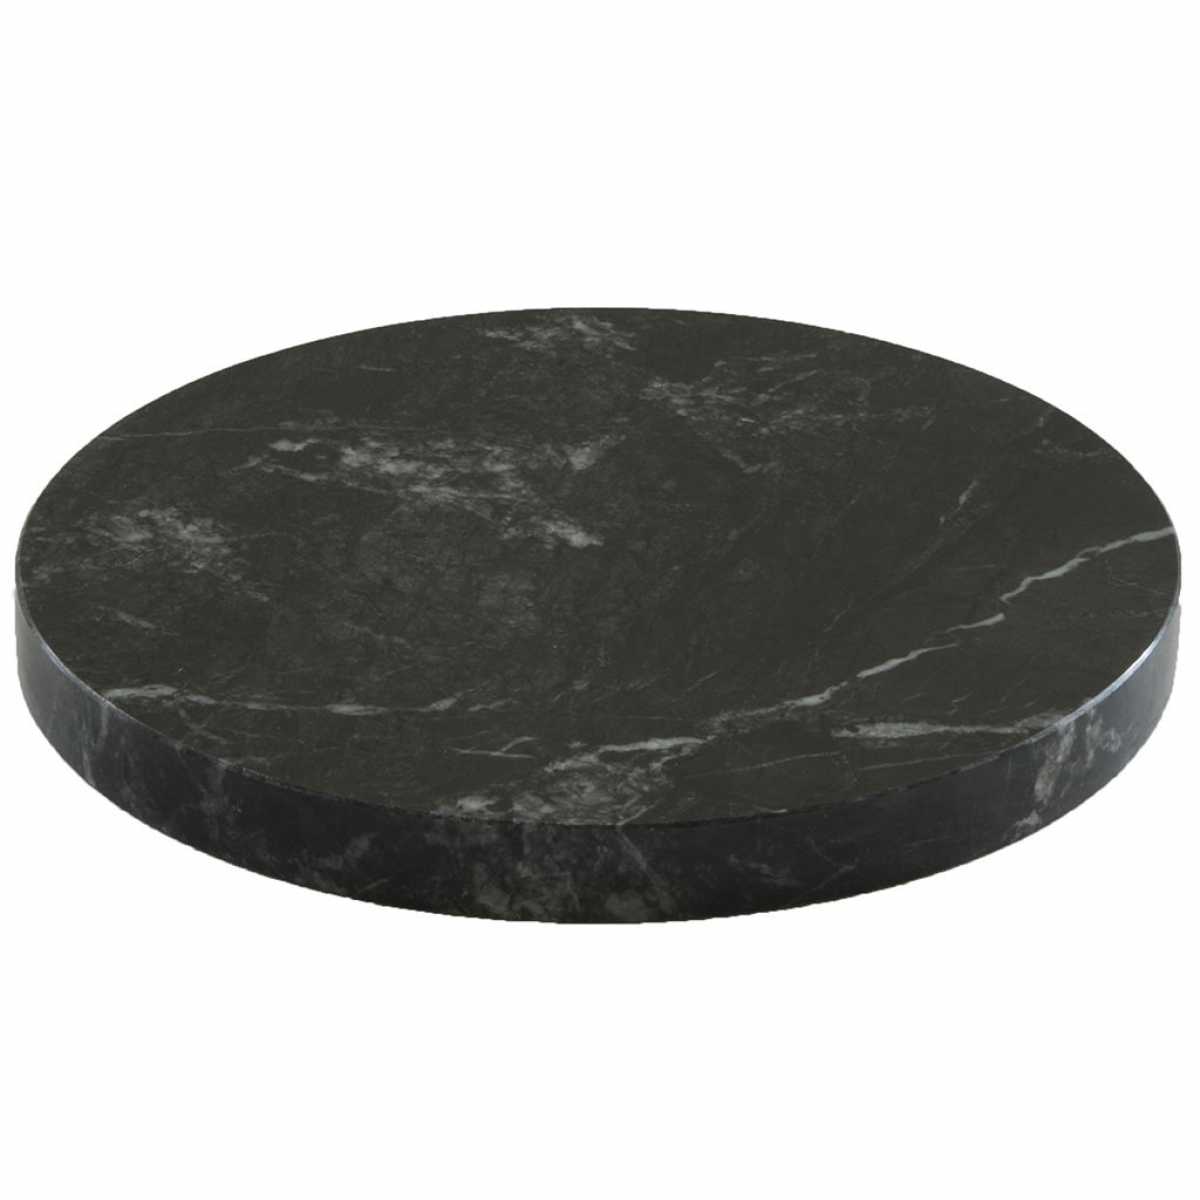 CRASTER Tilt Marble Round Plinth